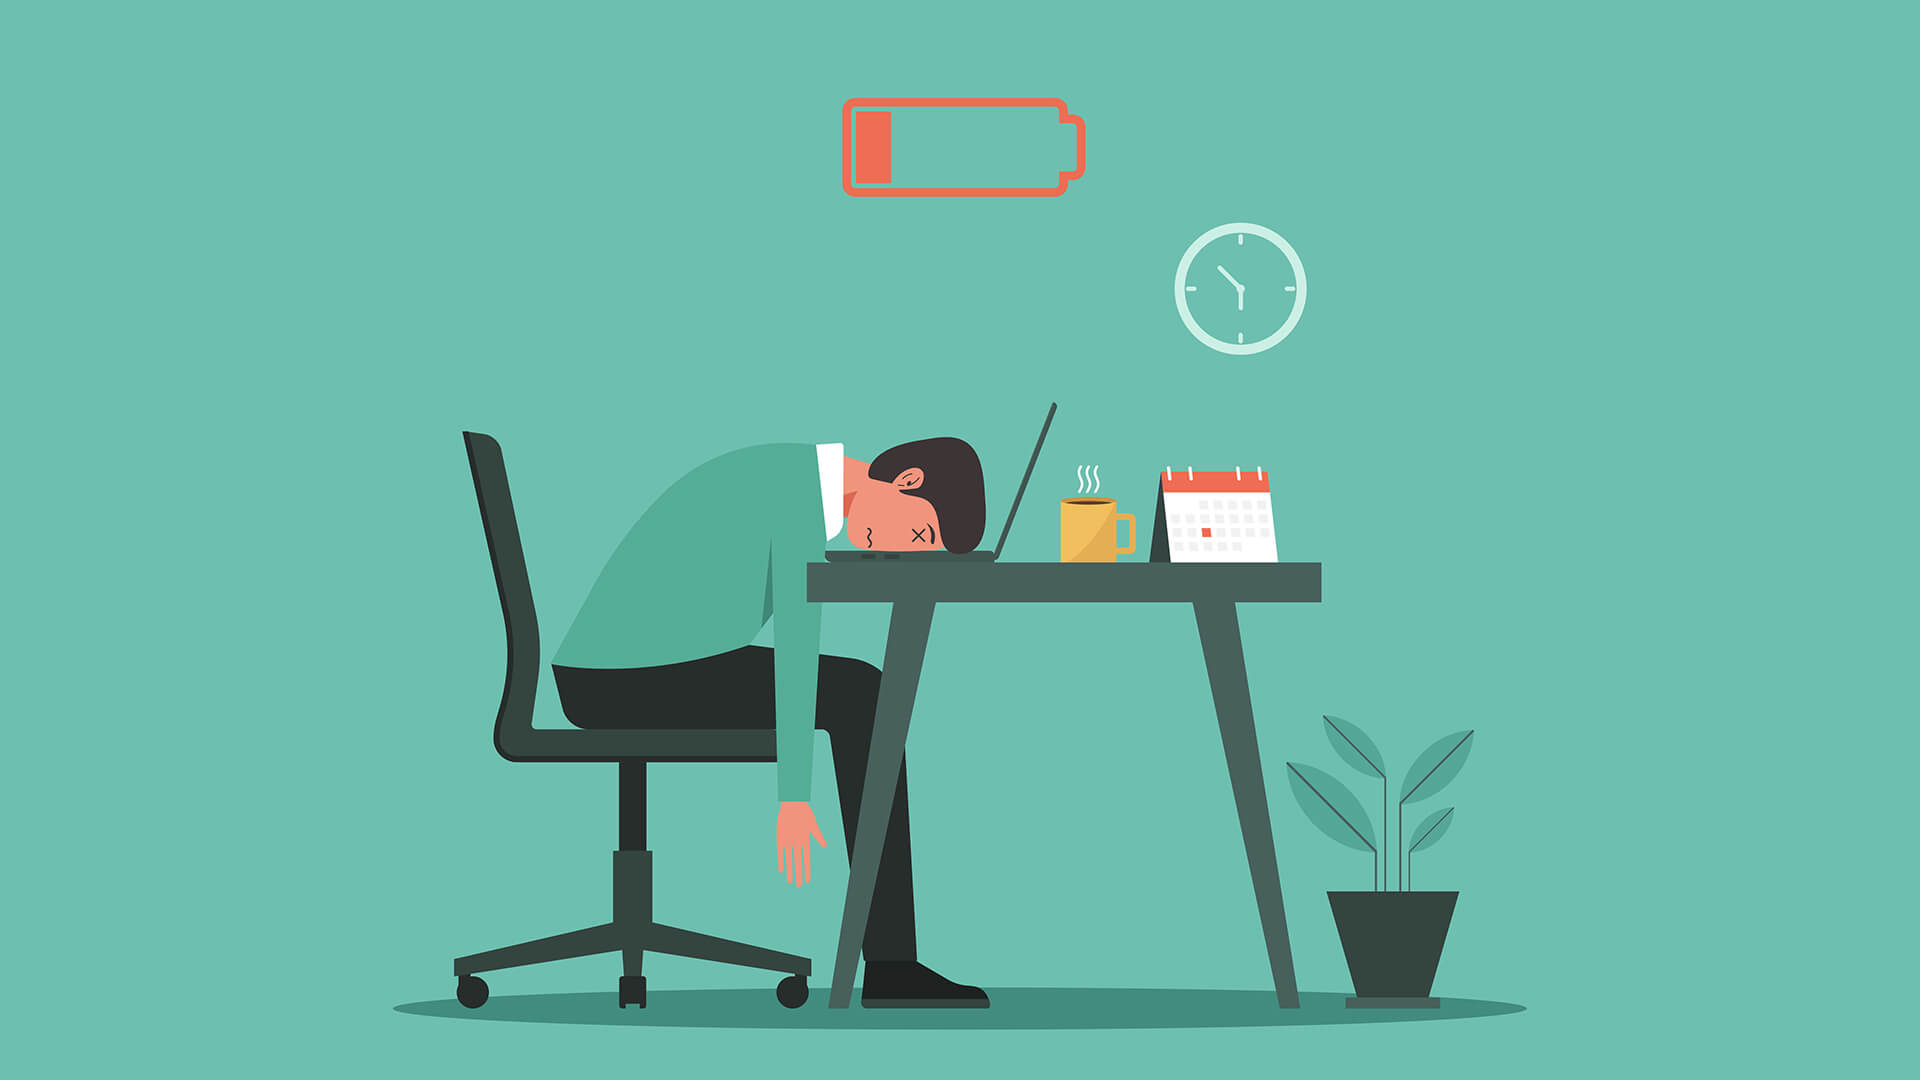 Workplace burnout